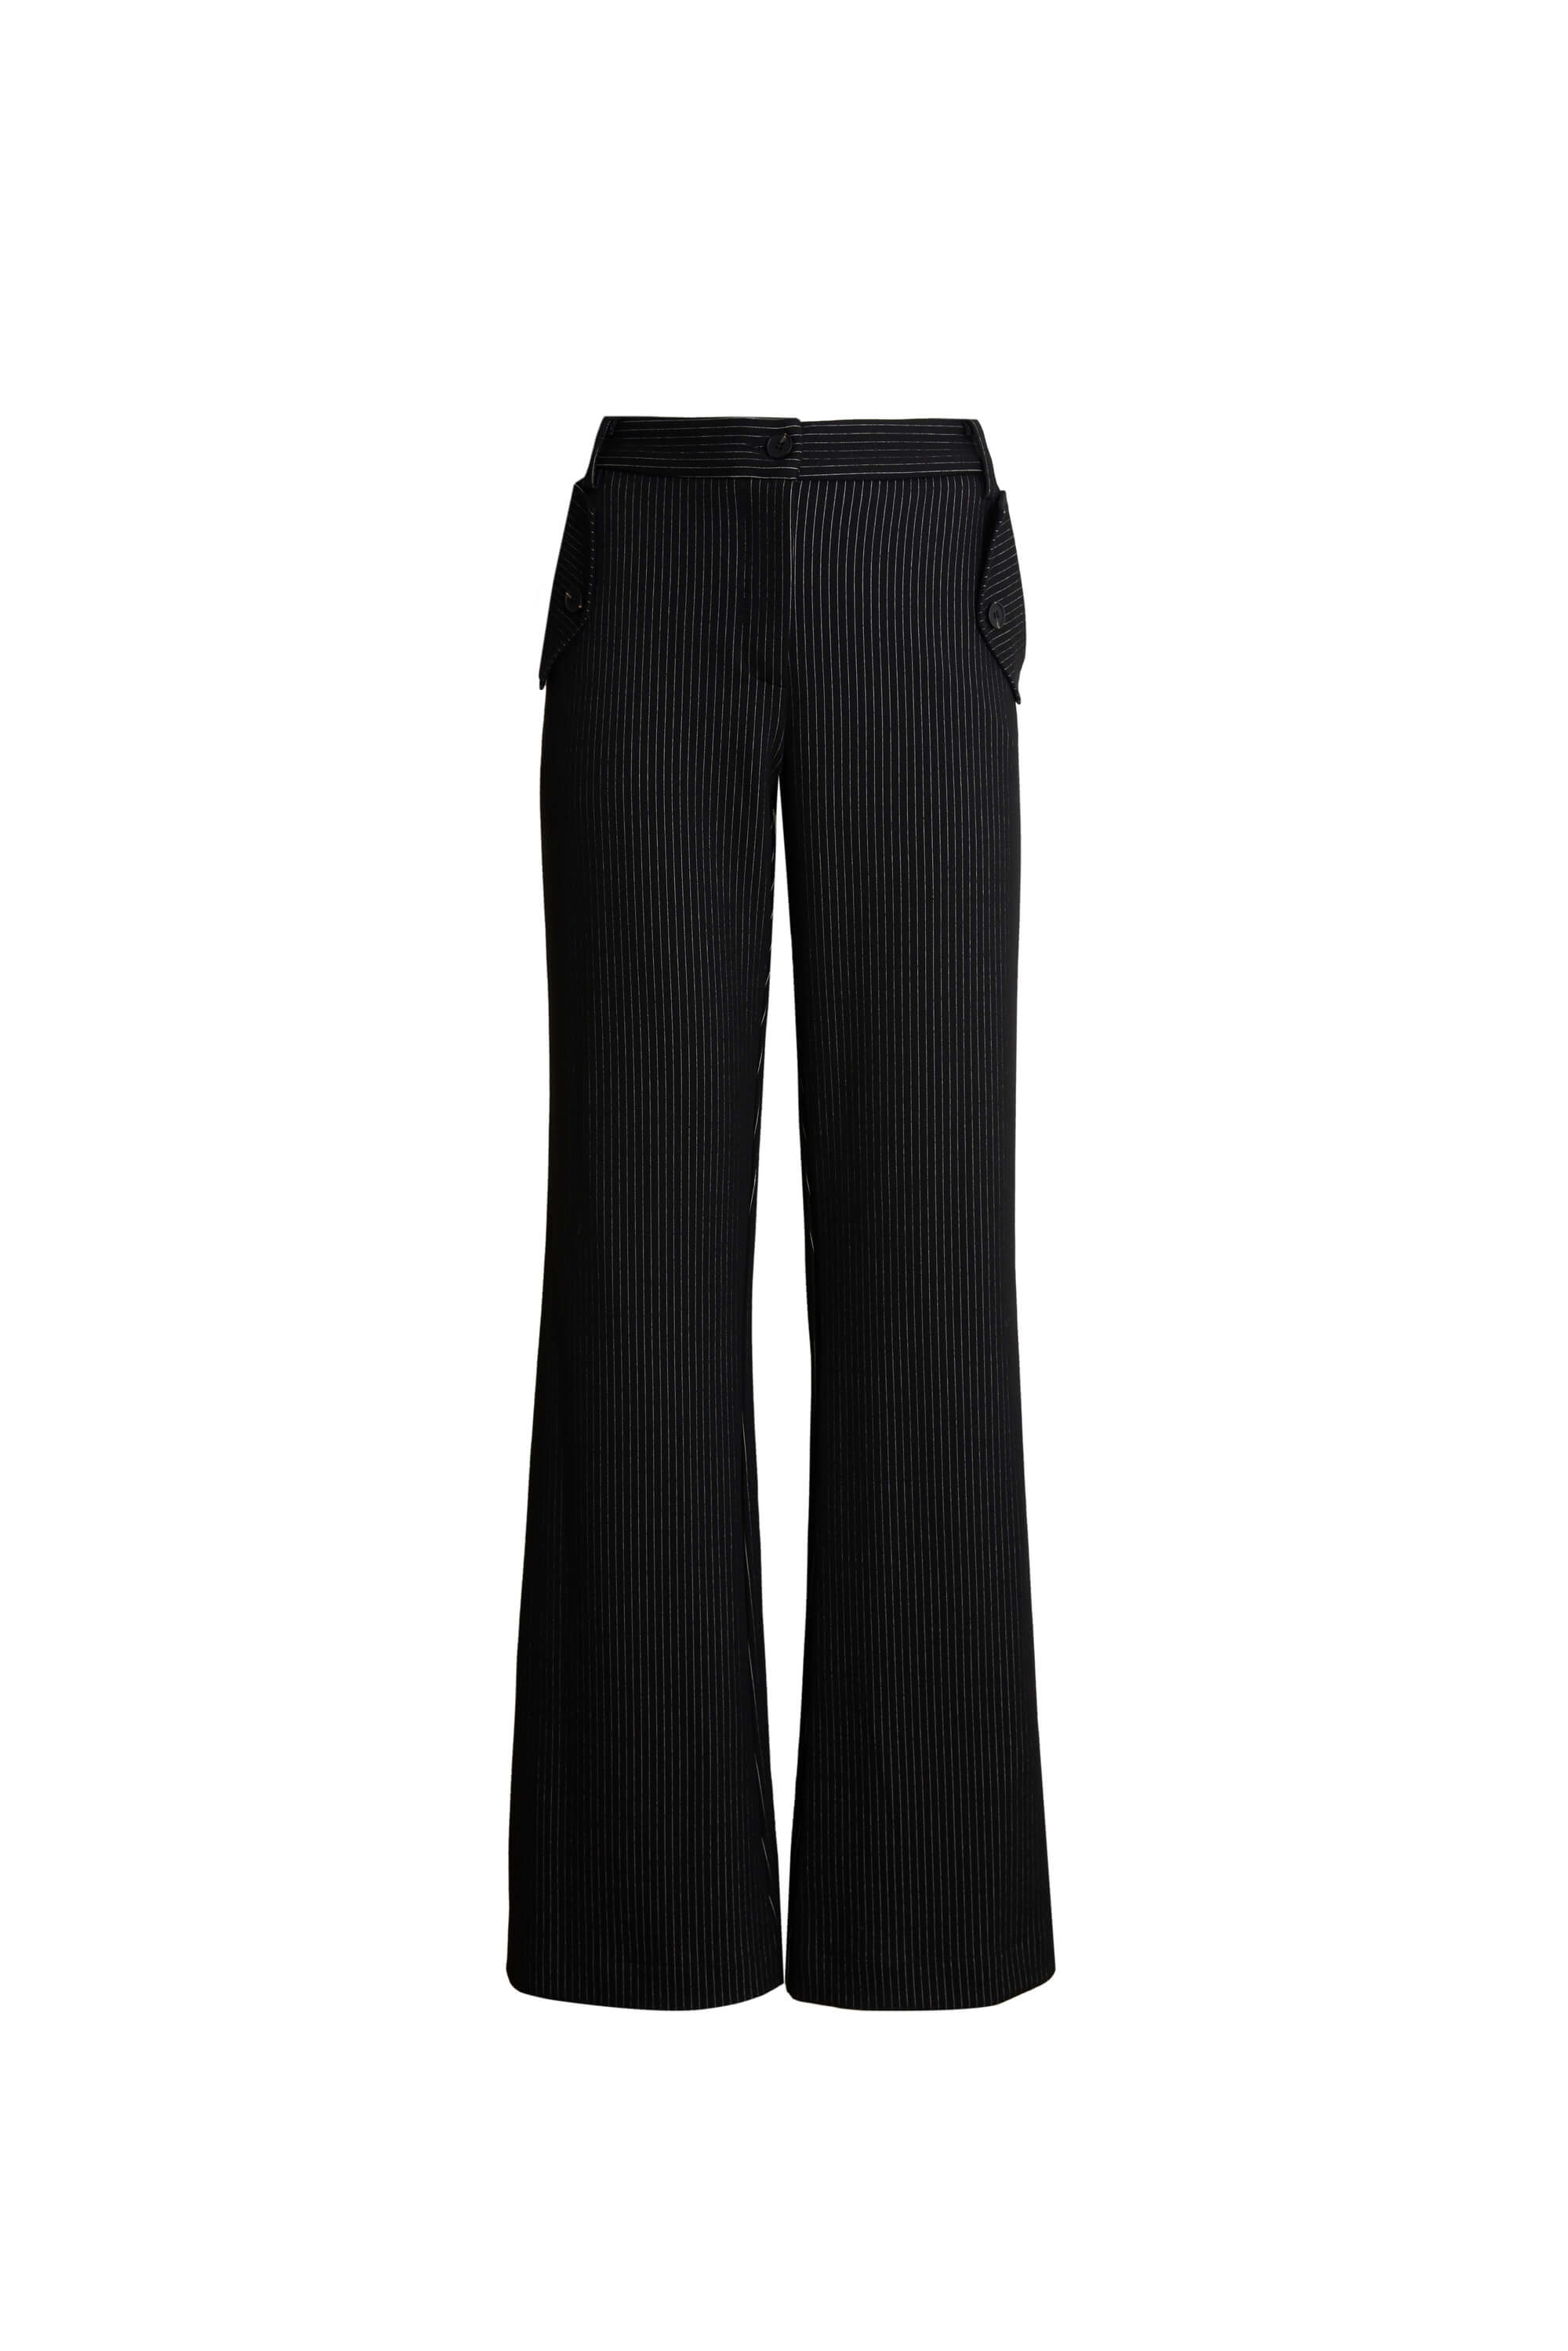 Women’s Black Pin Stripe Tailored Trousers Medium James Lakeland